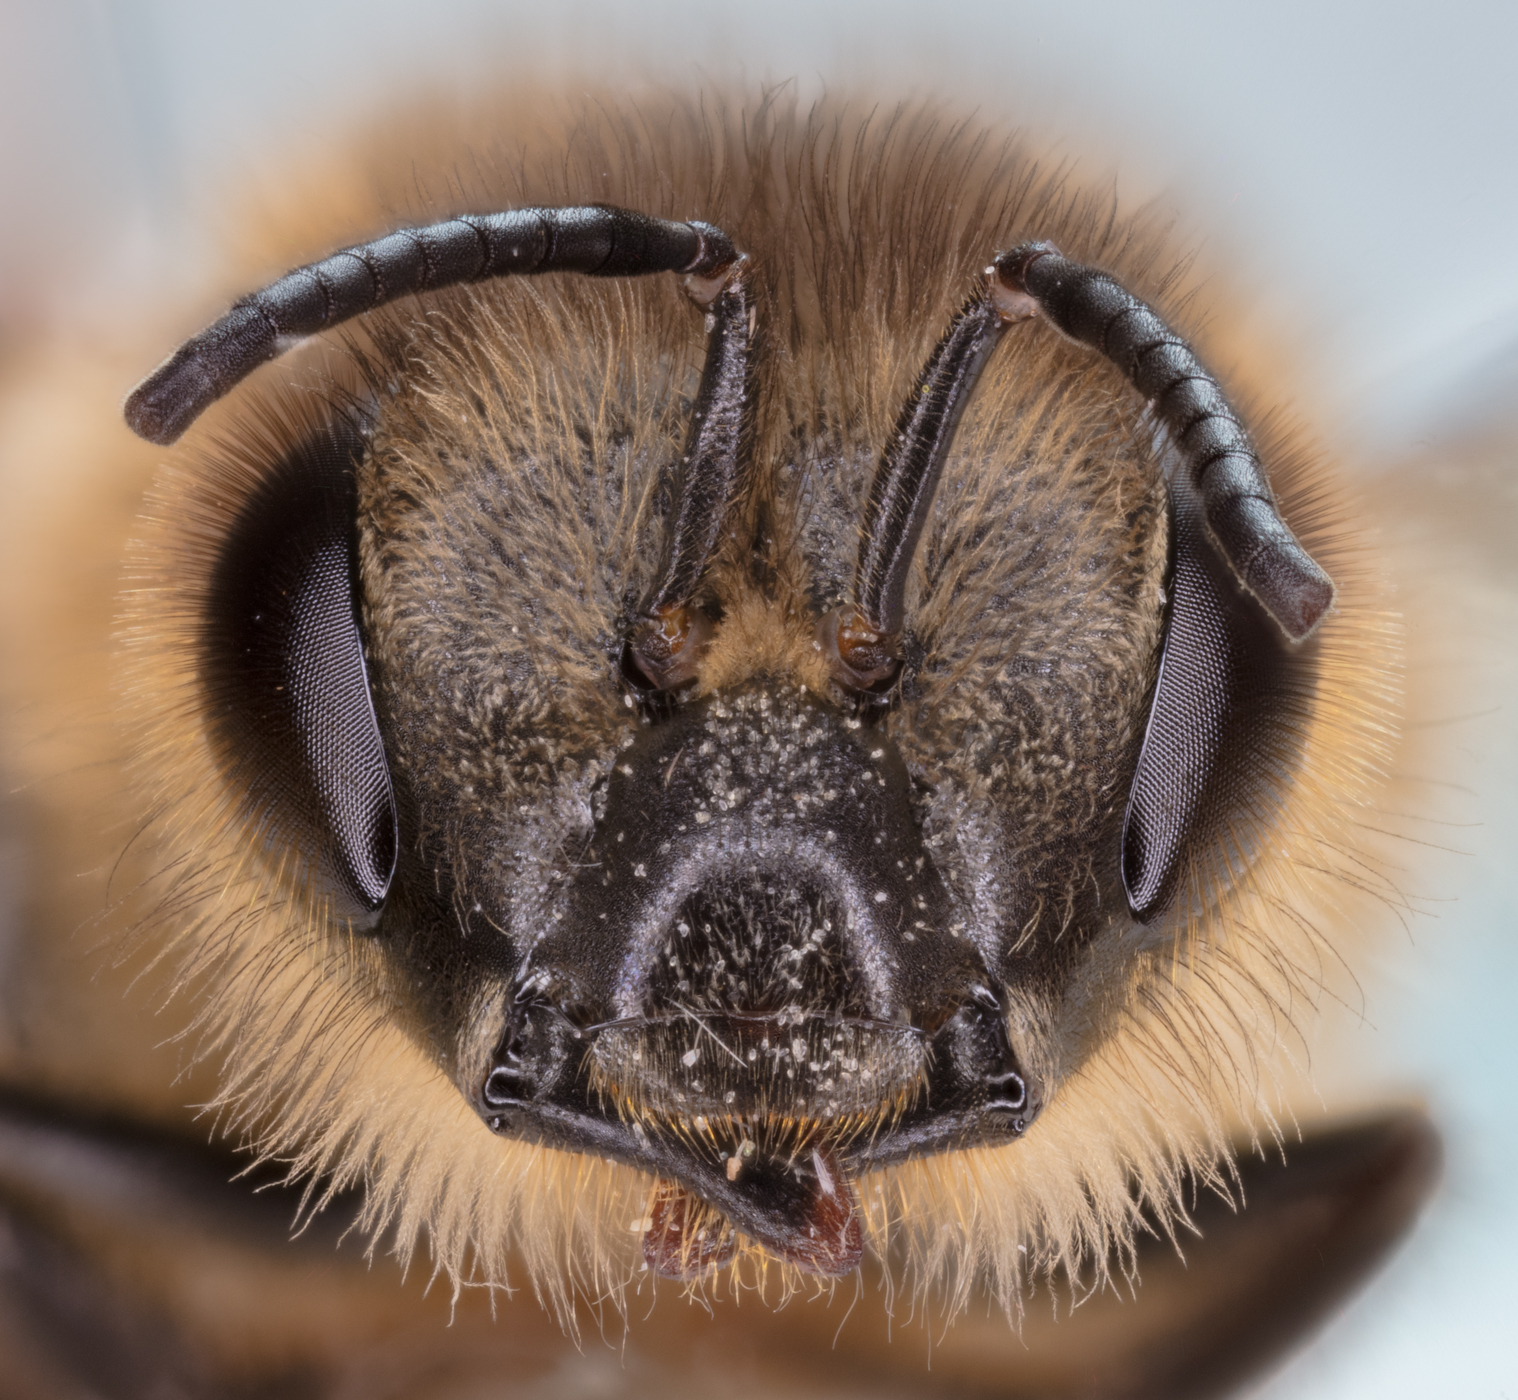 Bee (Colletes daviesanus), Hartelholz, Munich, Germany